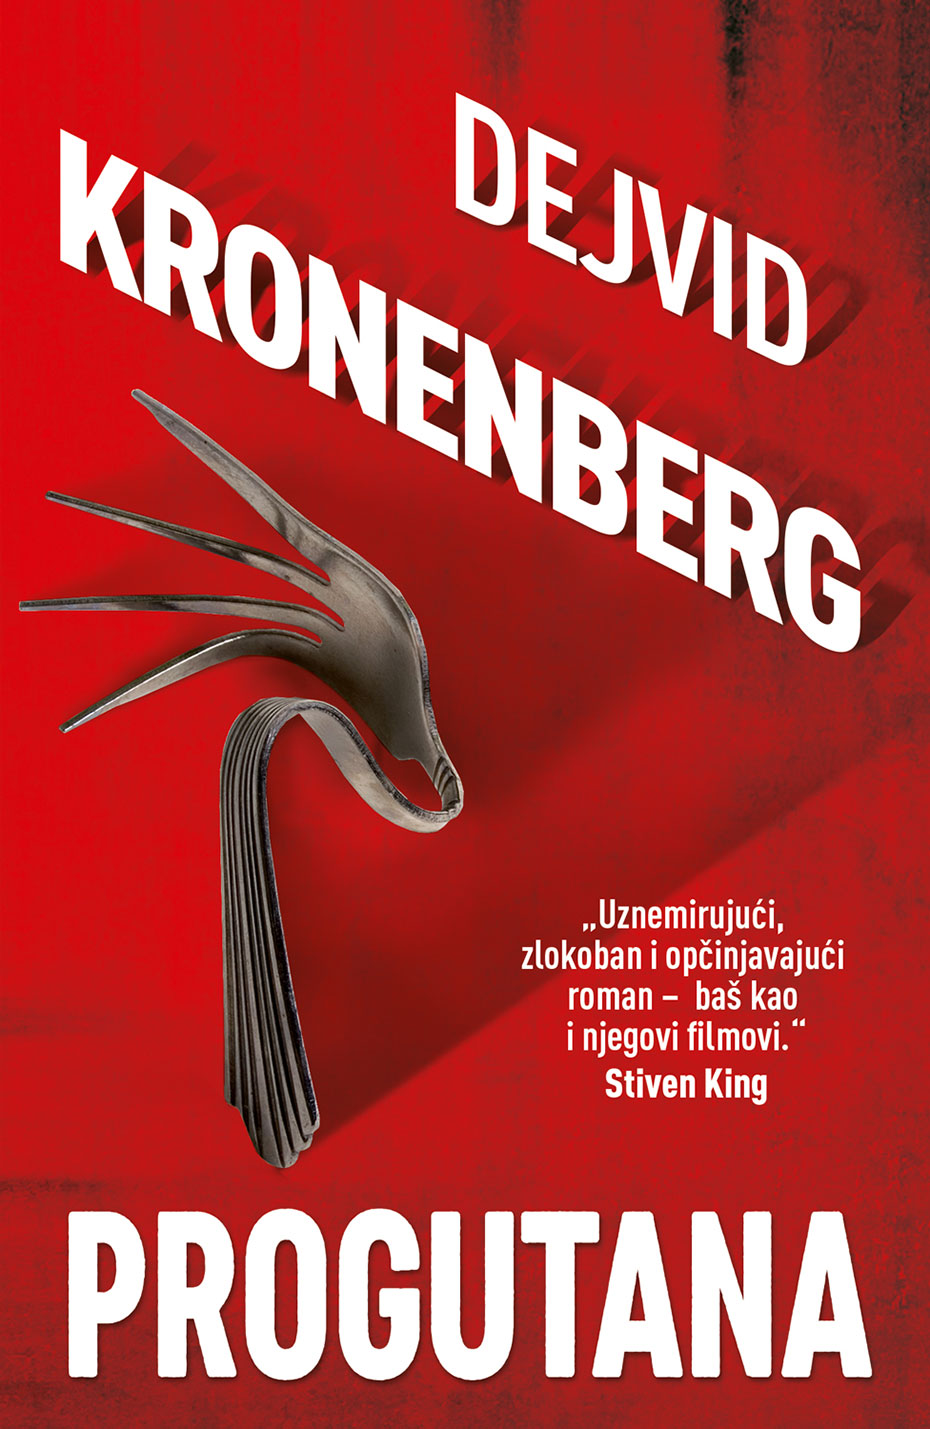 Knjiga-na-poklon-Progutana-Dejvid-Kronenberg